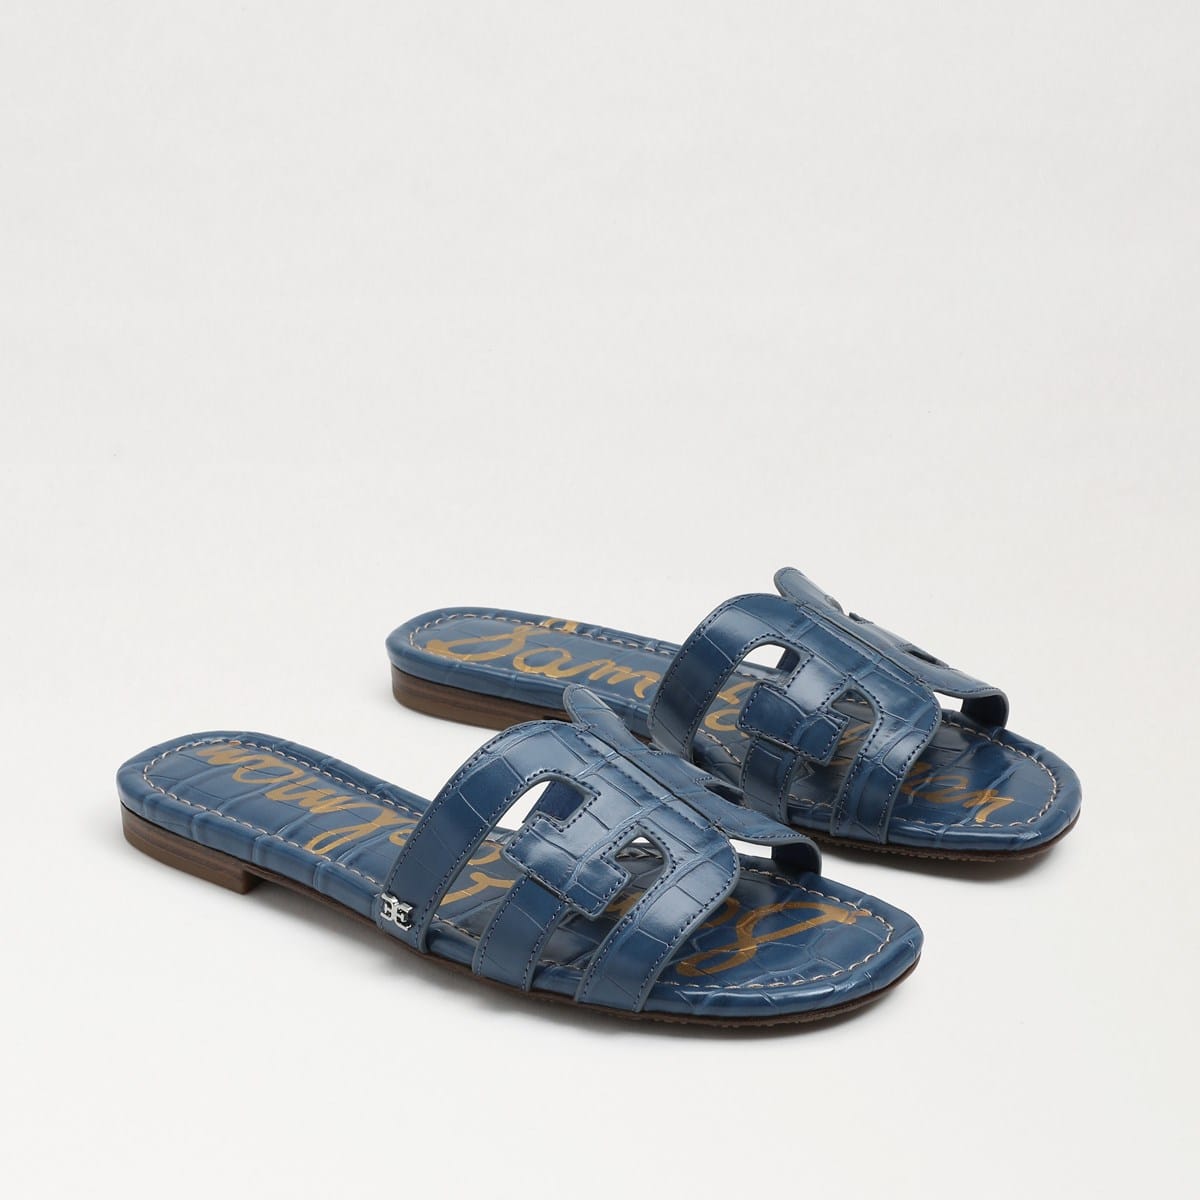 Sam Edelman Bay Slide Sandal Deep Capsian Blue Croc s4TEZkz0